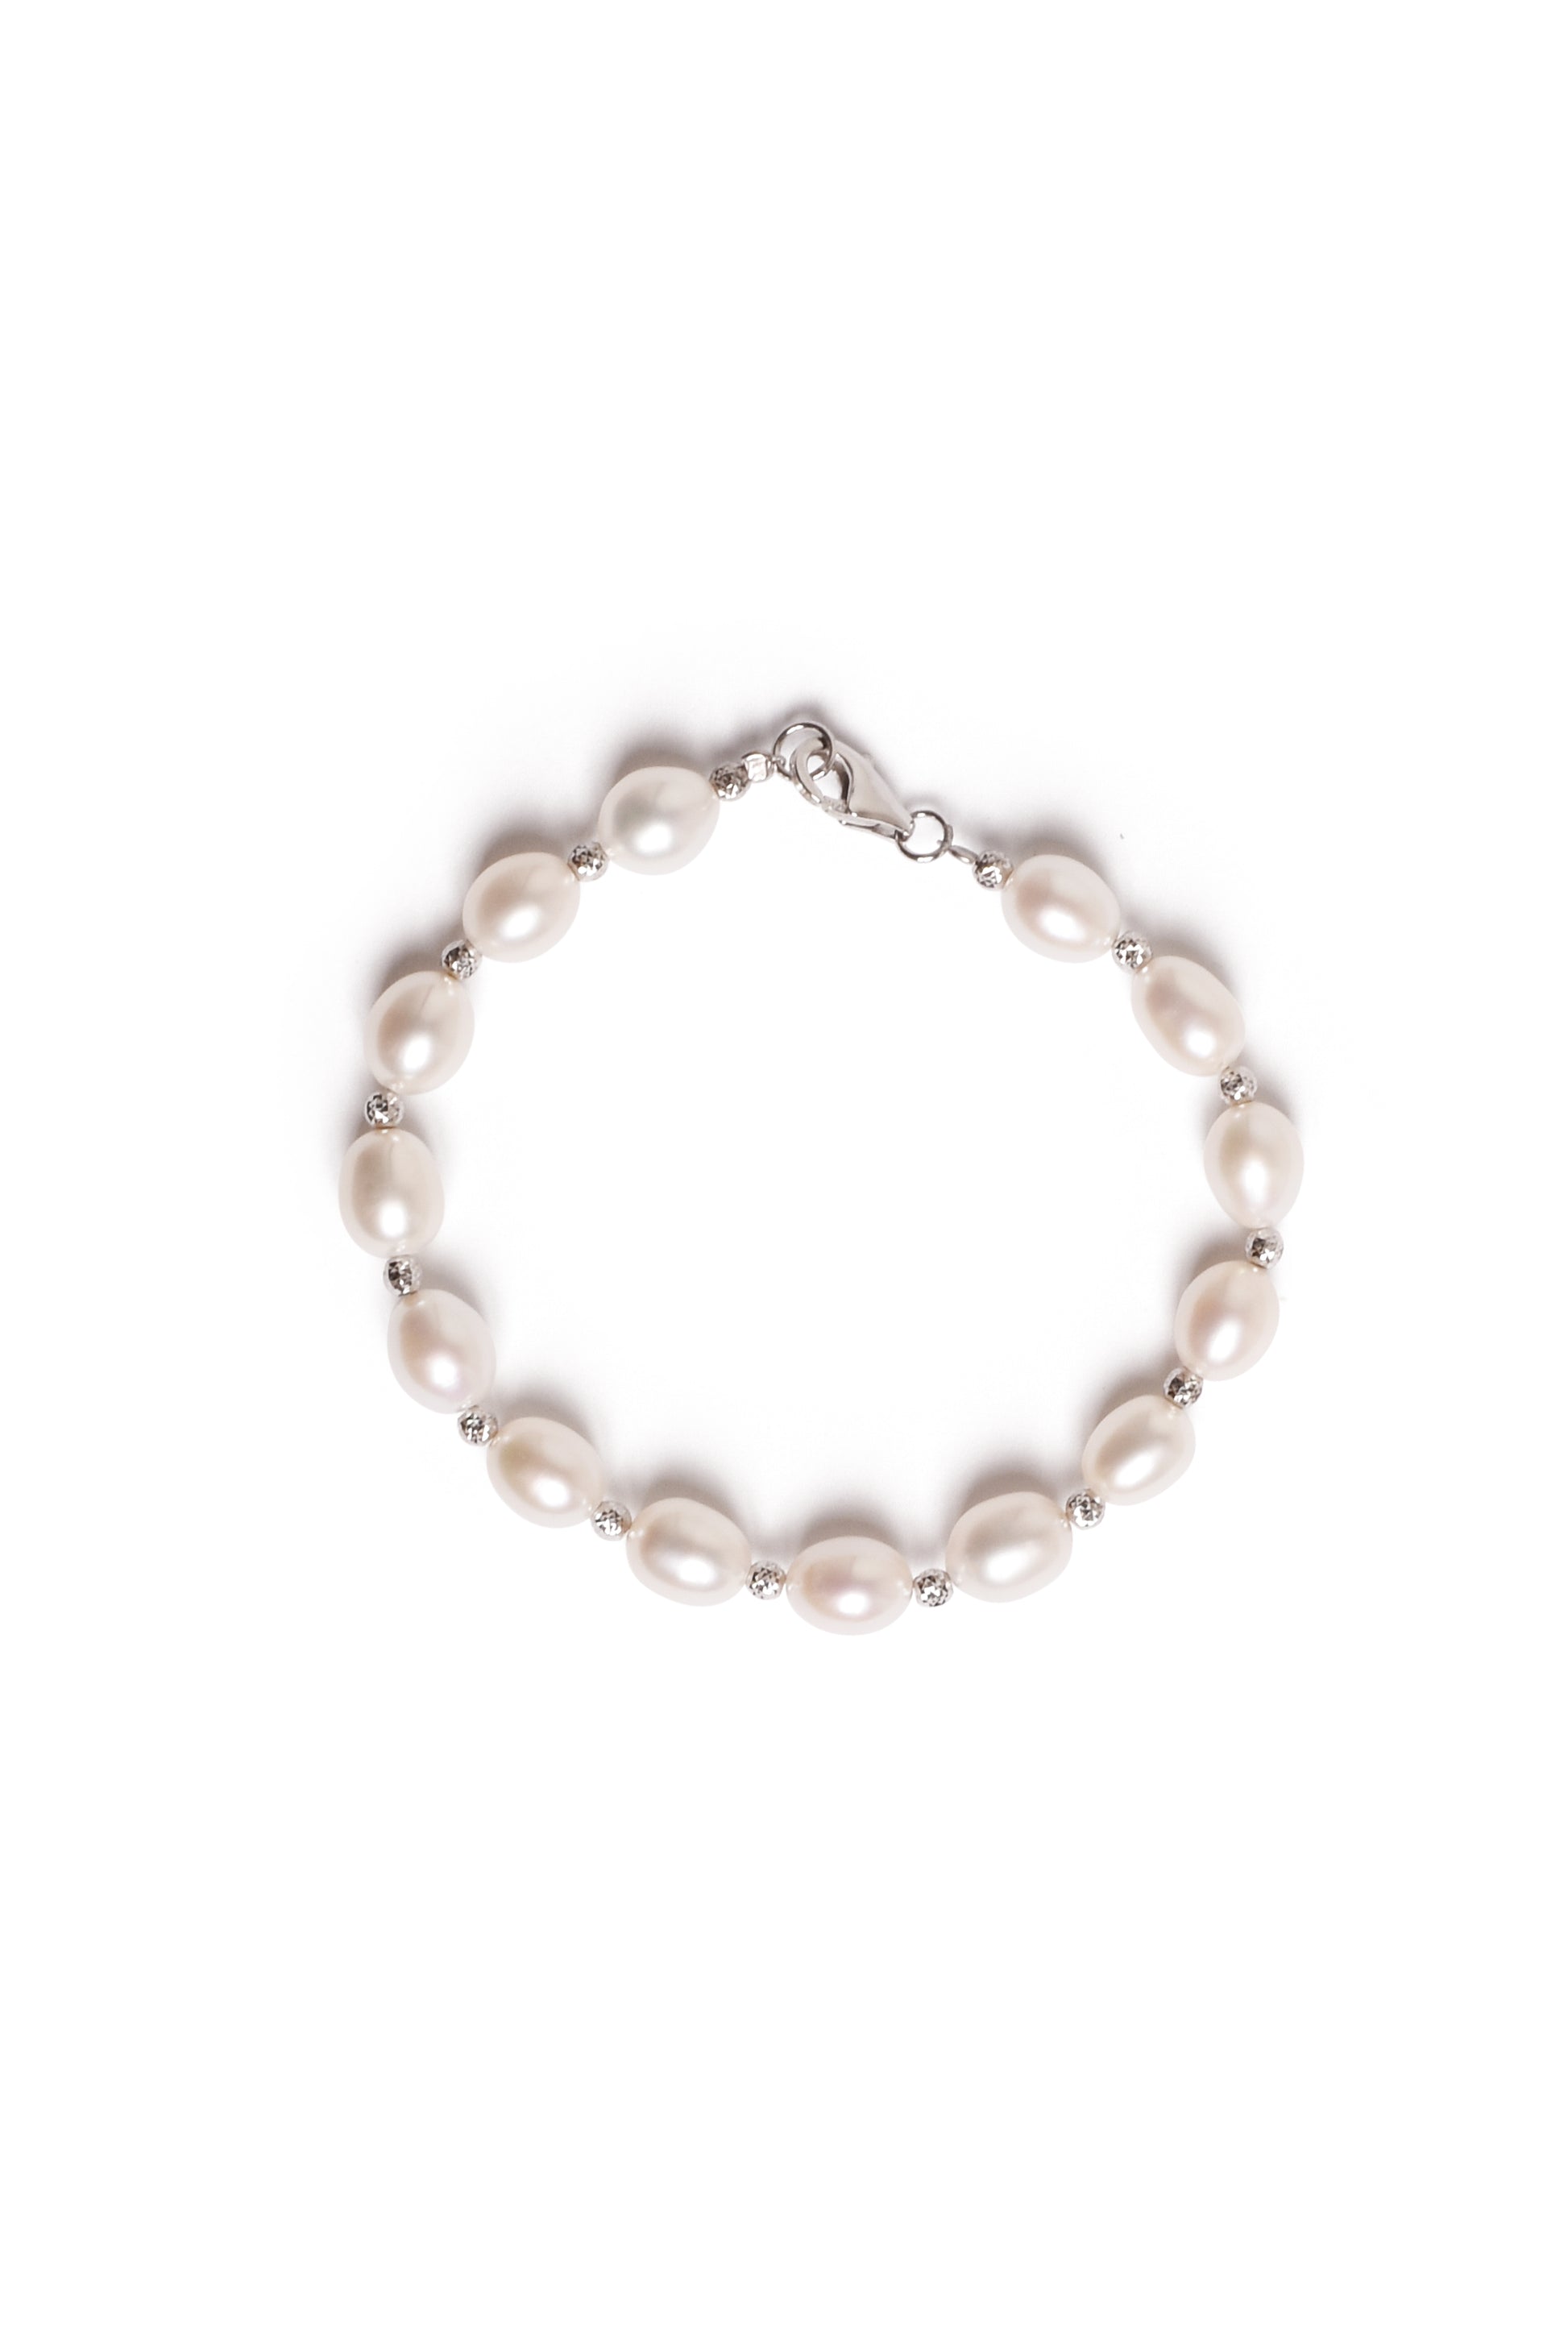 Sterling Silver Grey or White Freshwater Pearl Bracelet 7.5" White